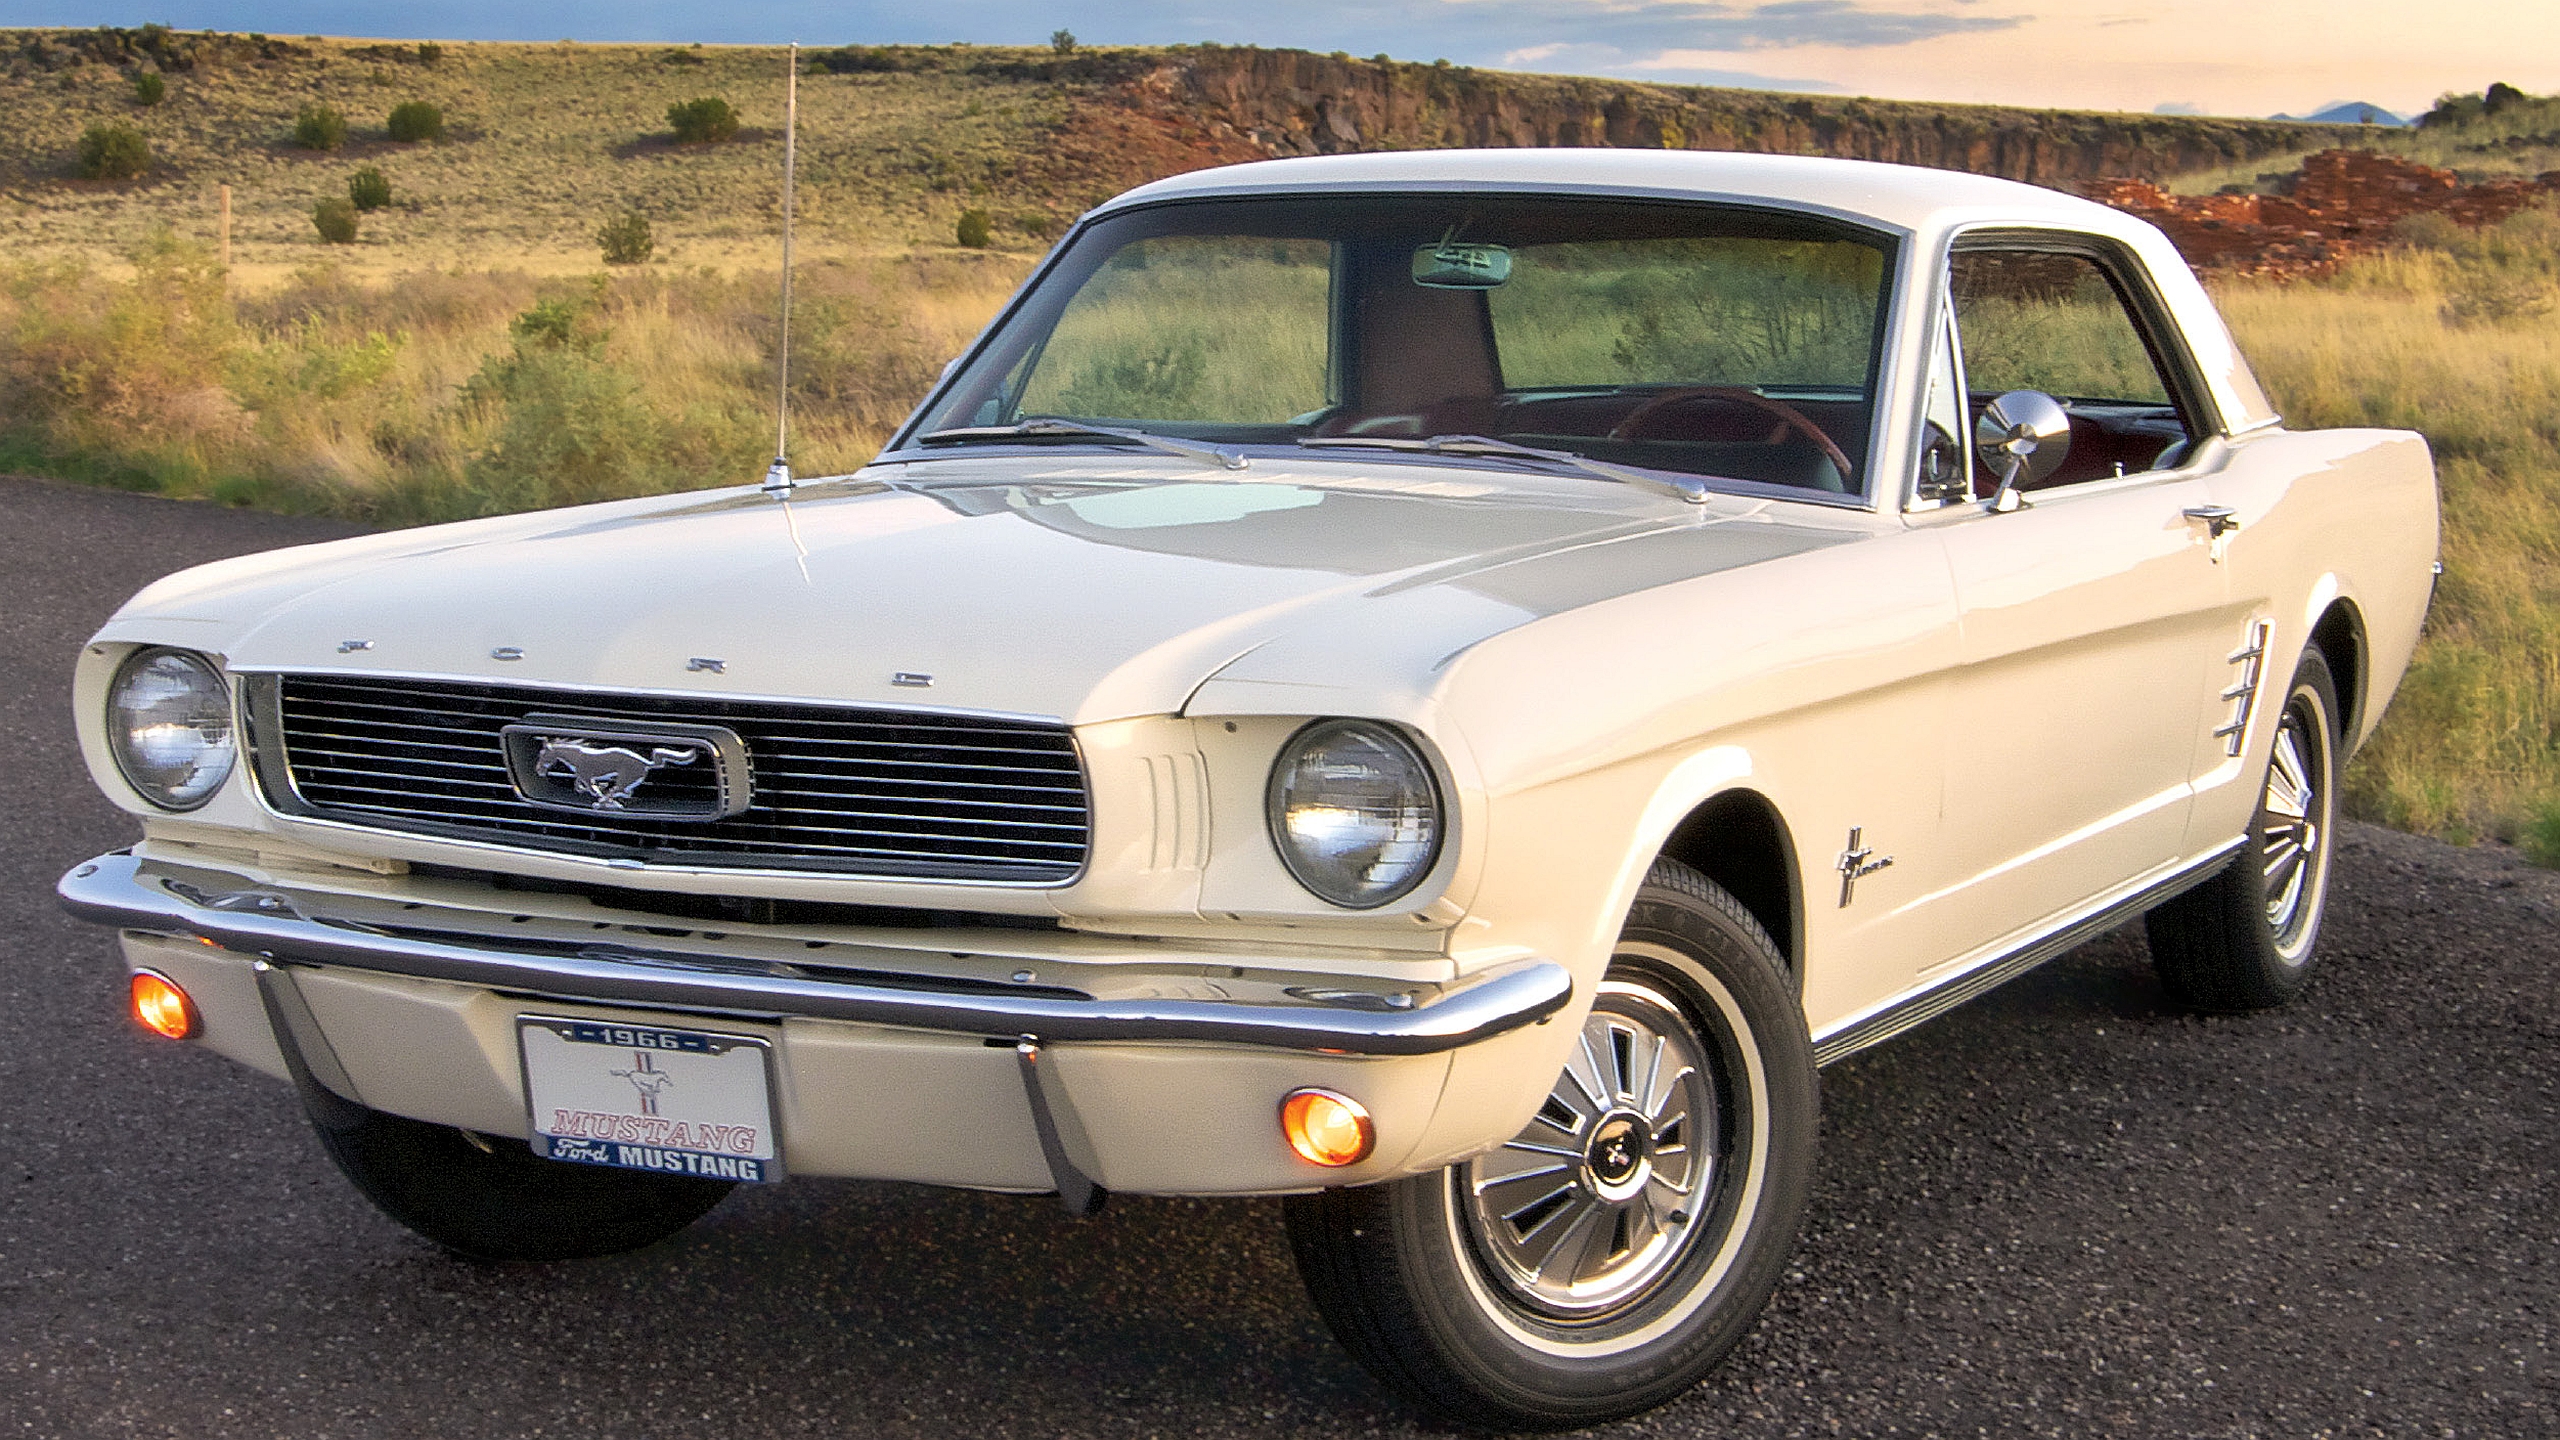 Купить старый форд. Ford Mustang 1966. Форд Мустанг 1965. Ford Mustang i 1966. Ford Mustang Hardtop 1966.